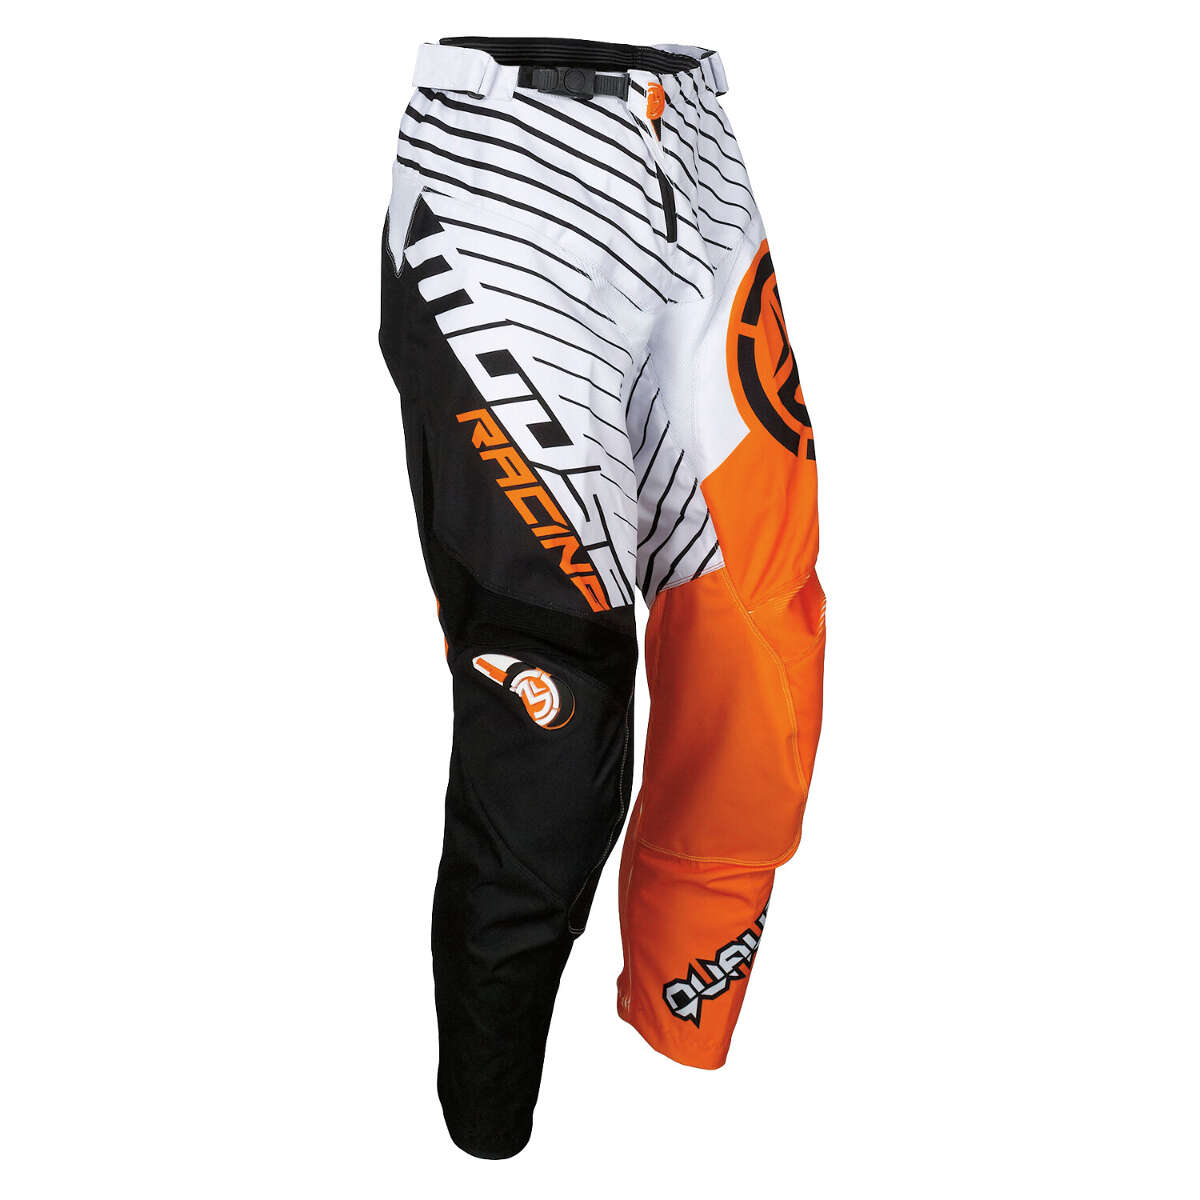 Moose Racing MX Pants Qualifier White/Black/Orange - Large Fit